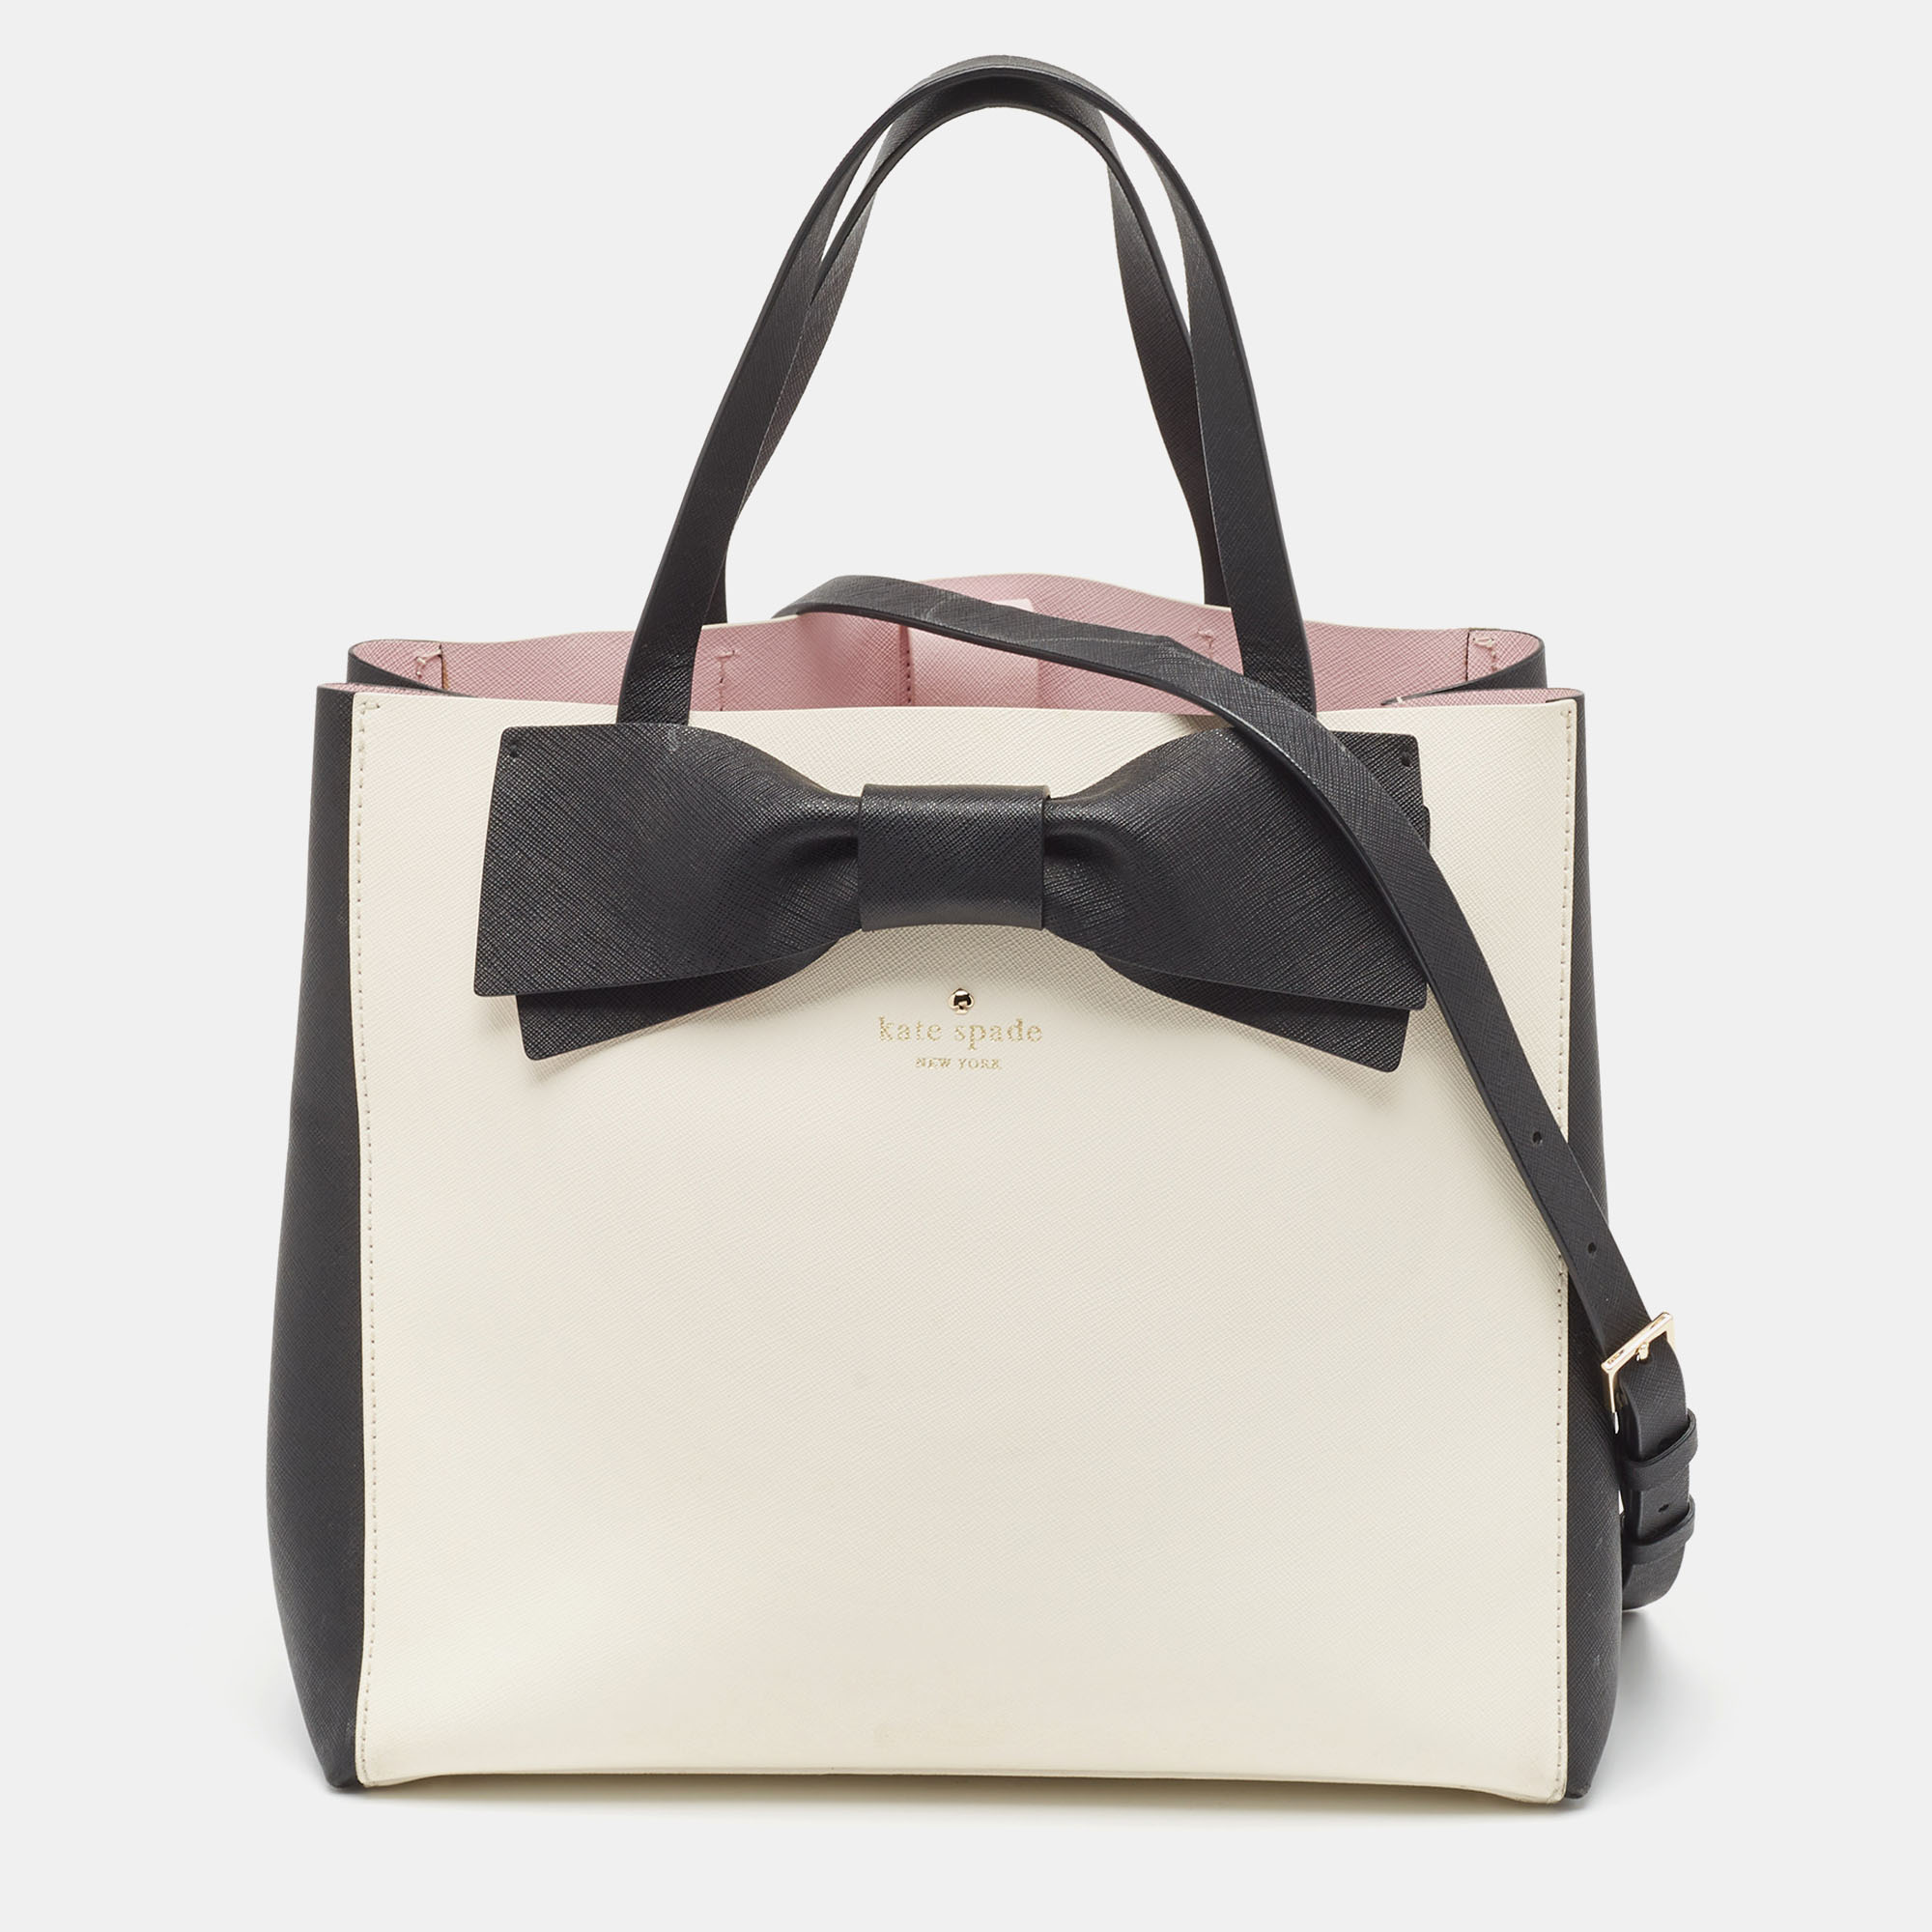 Kate Spade Bow Hot Pink Large Handbag | eBay